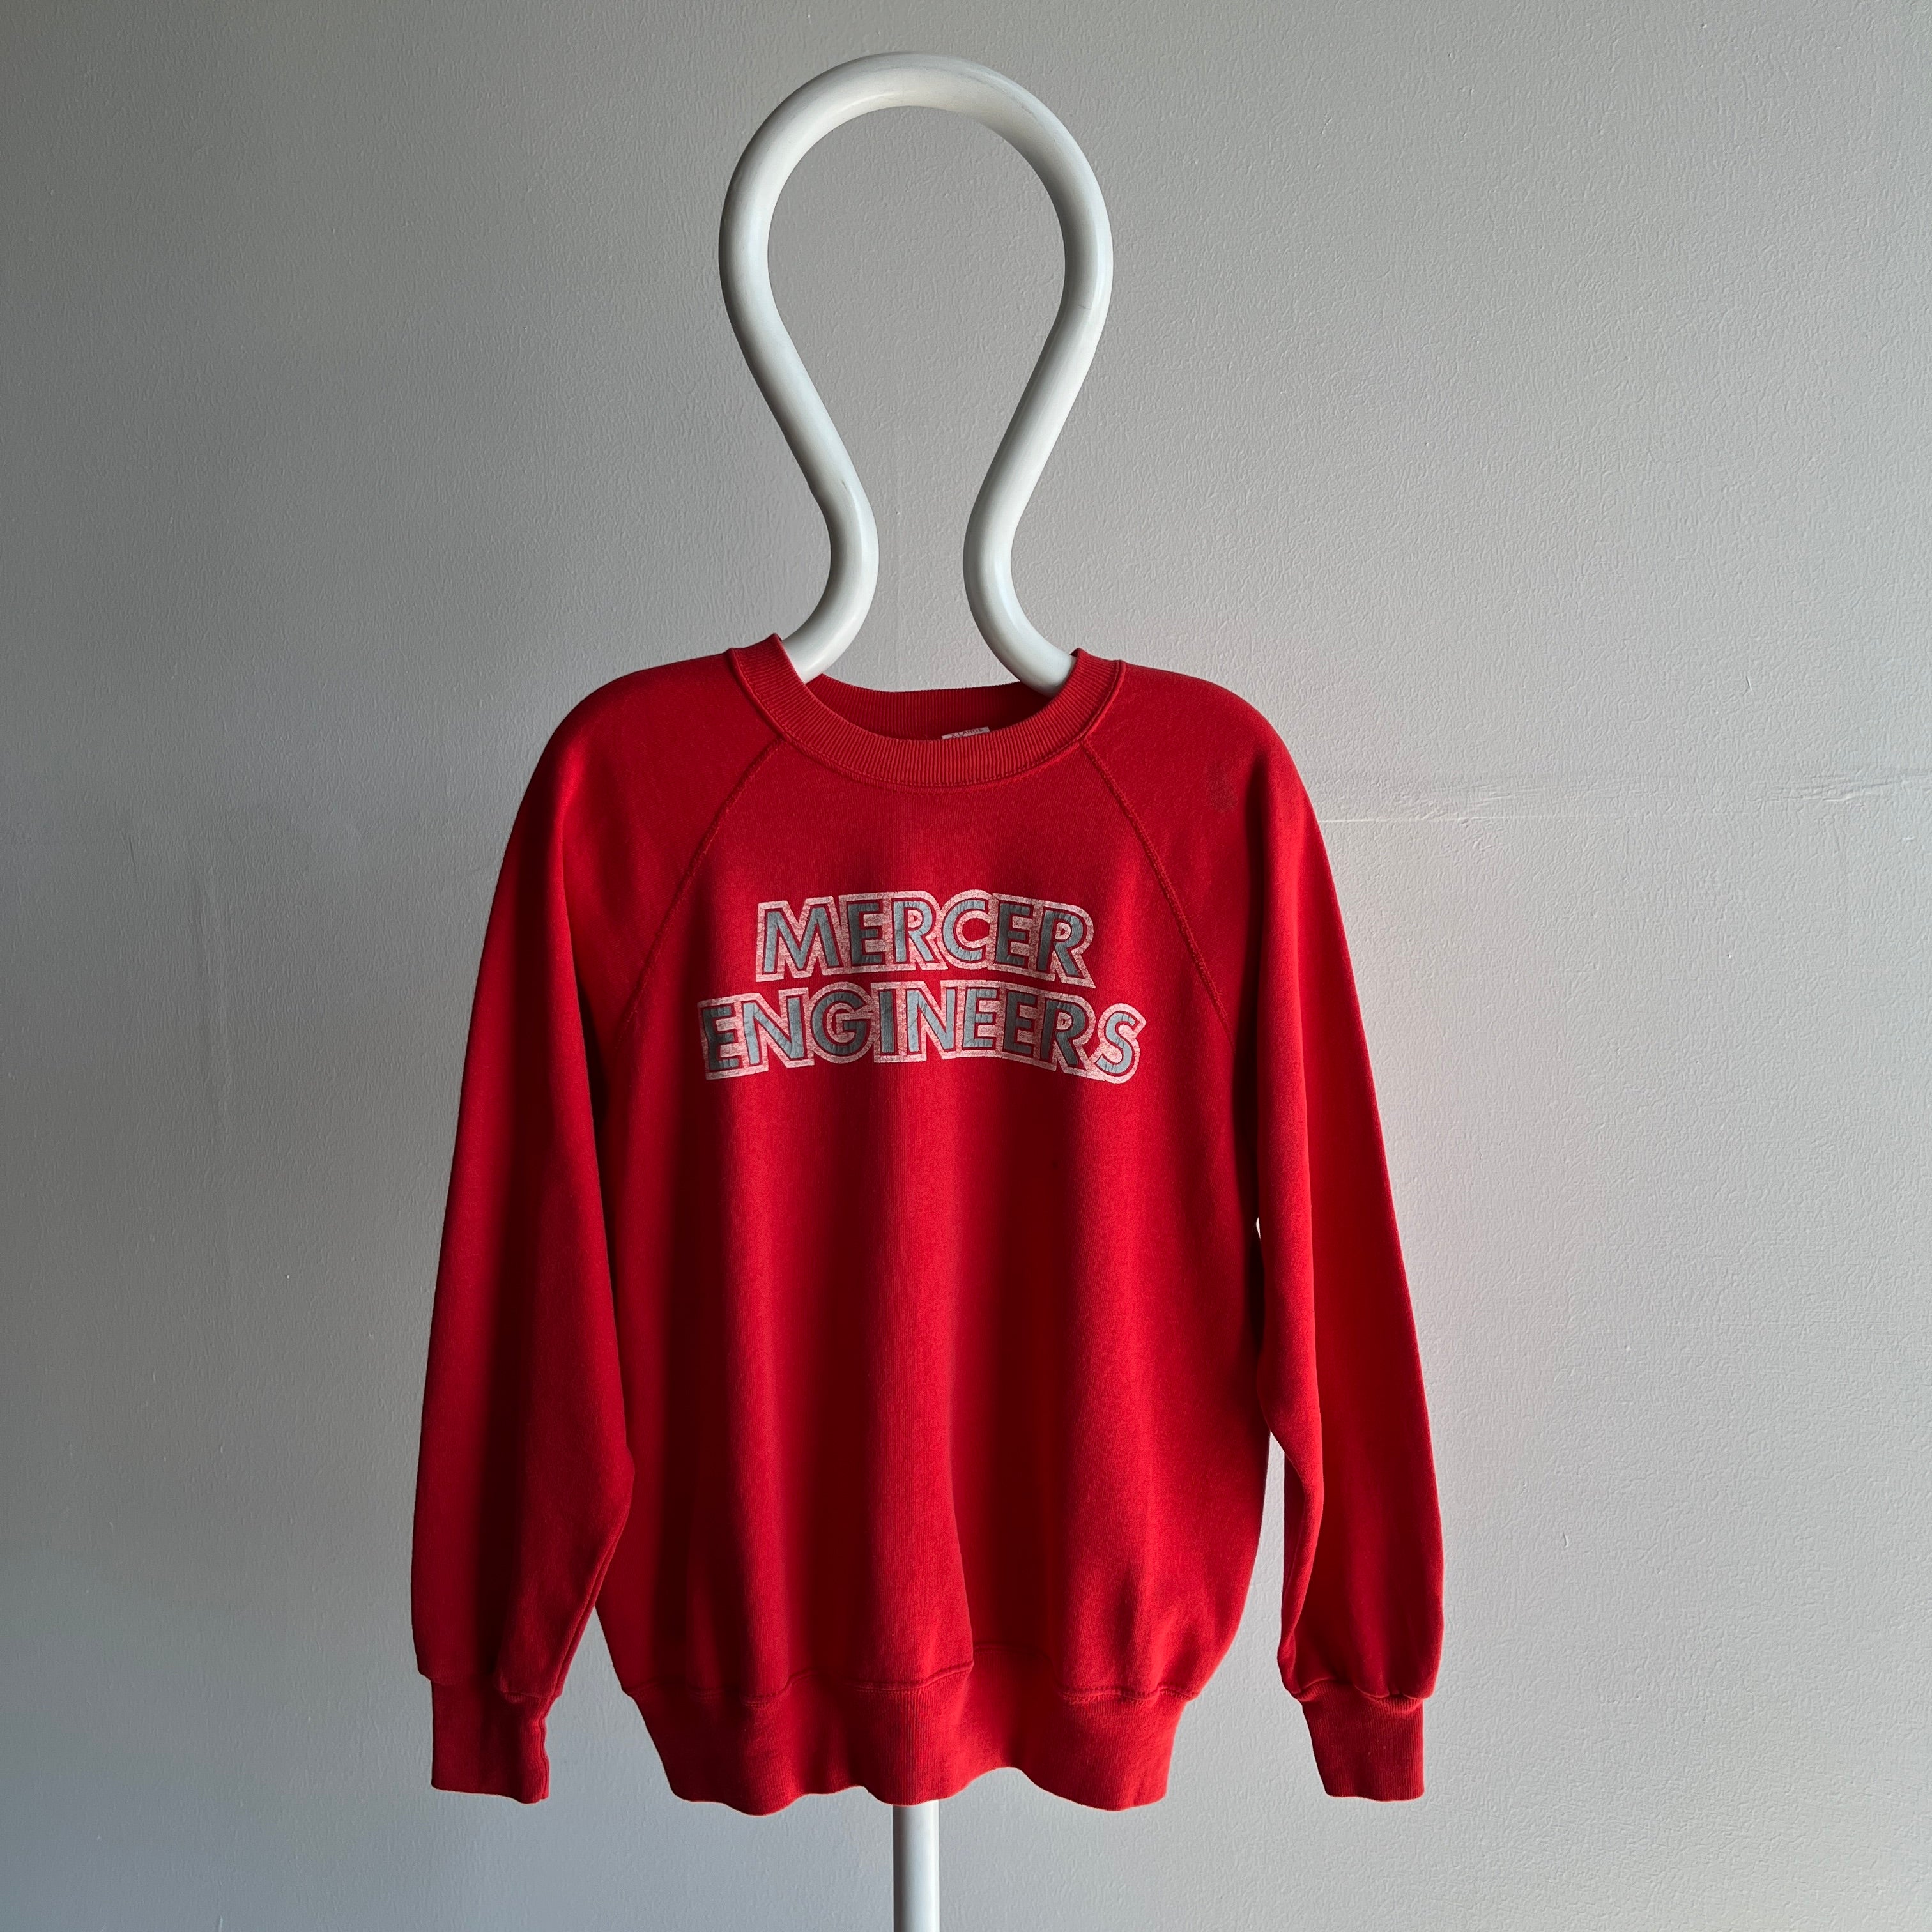 1970s Champion Brand Mercer Engineer Sweatshirt – Red Vintage Co